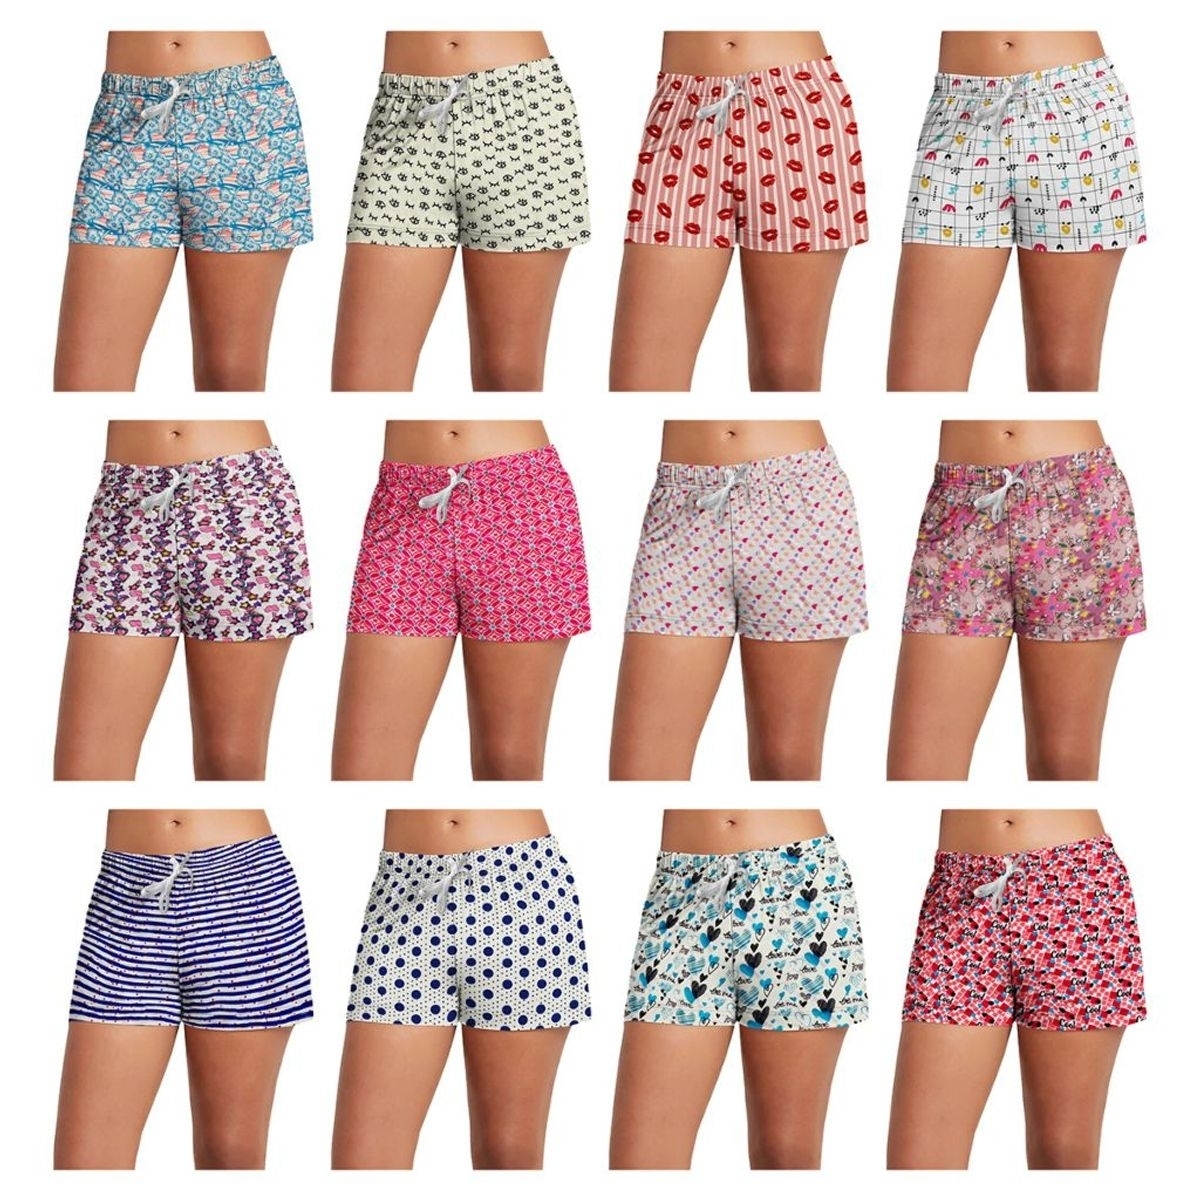 5-Pack: Women's Super-Soft Lightweight Fun Printed Comfy Lounge Bottom Pajama Shorts W/ Drawstring - Large, Animal